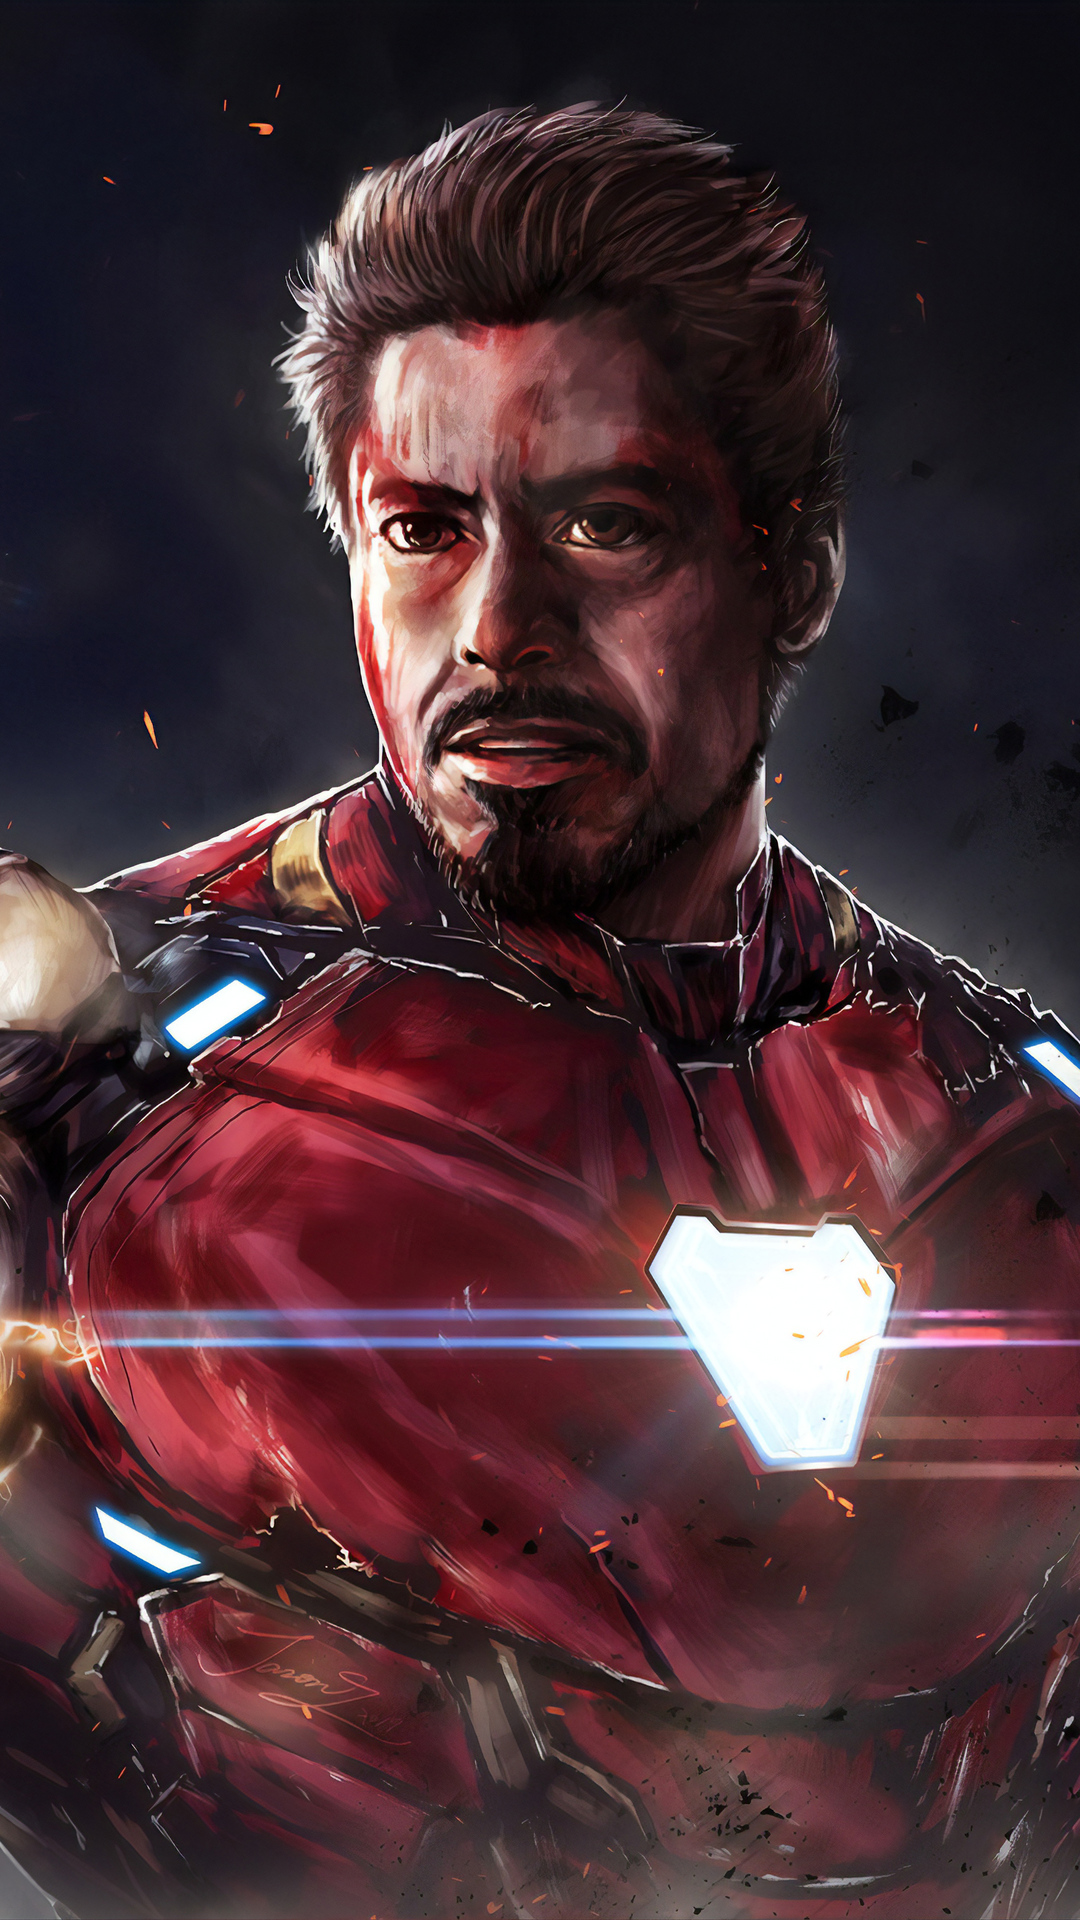 I Am Iron Man Art Wallpapers